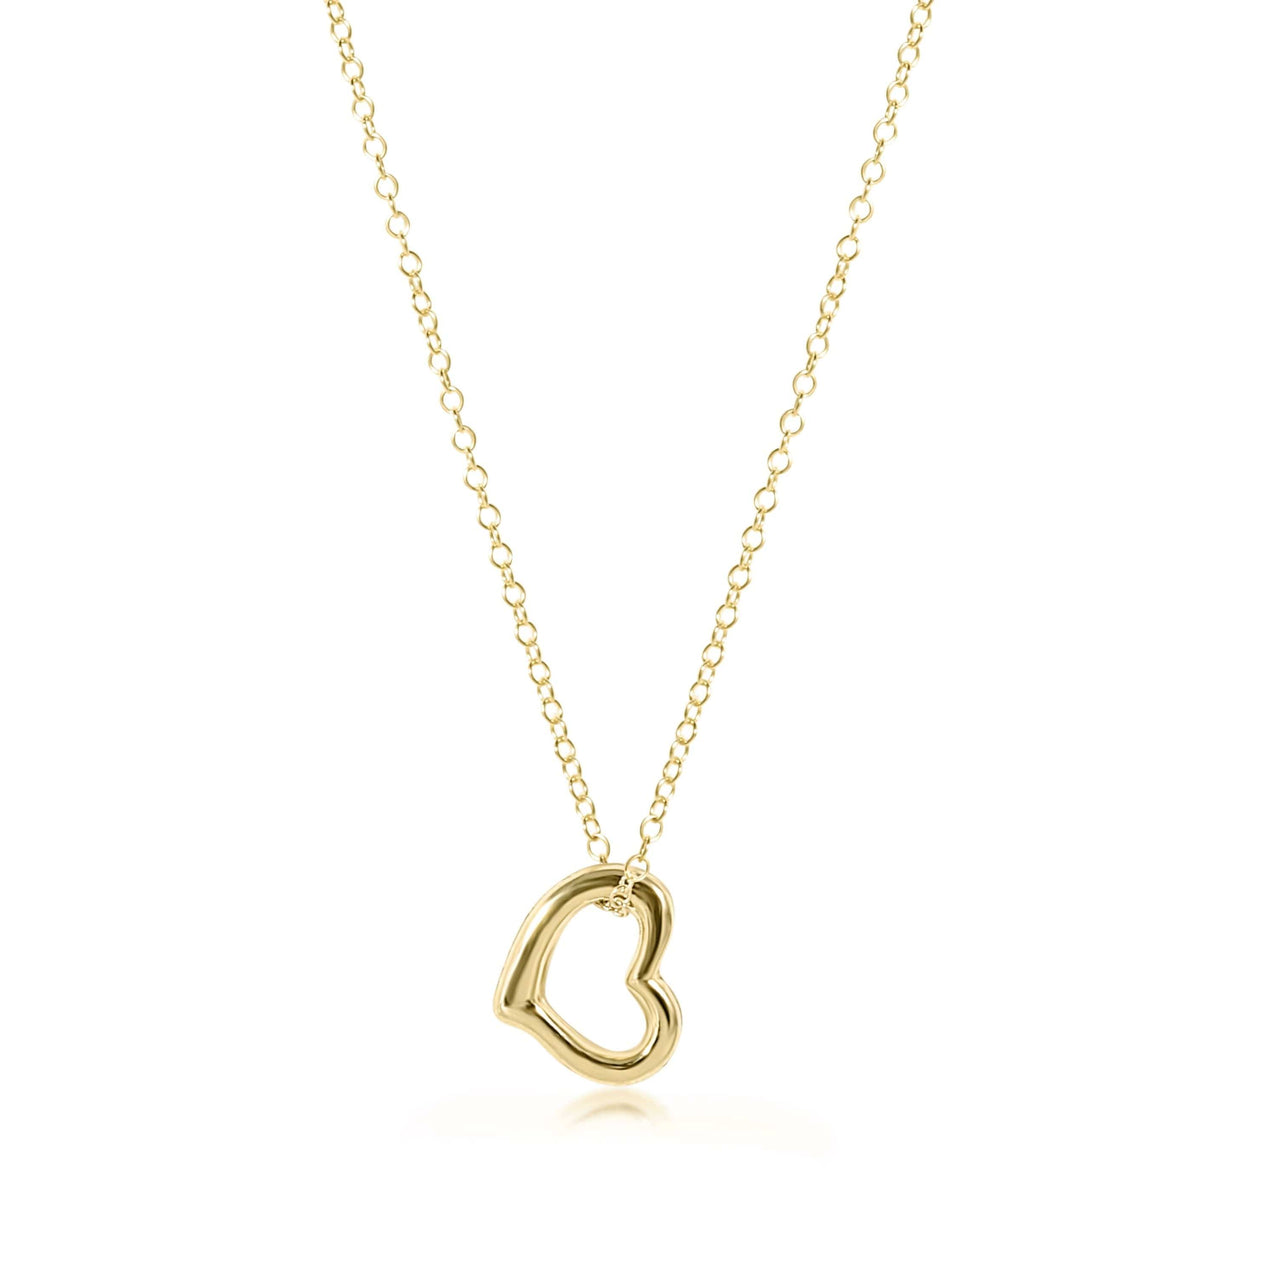 Gold Necklace Love Charm | e.newton Designs e.newton Designs Necklaces